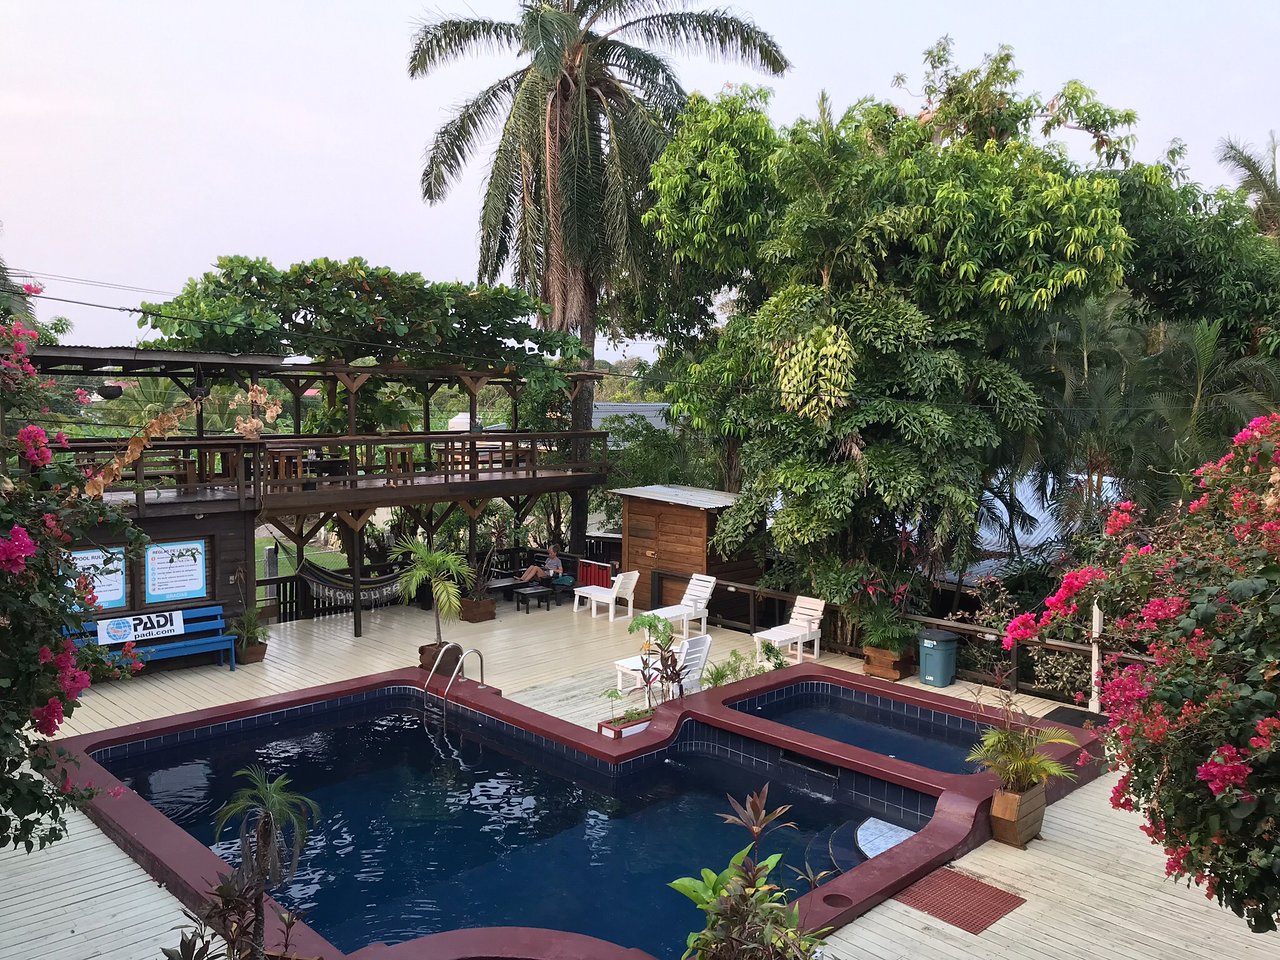 Schwimmpool Garten Einzigartig Mango Inn Resort Pool & Reviews Tripadvisor